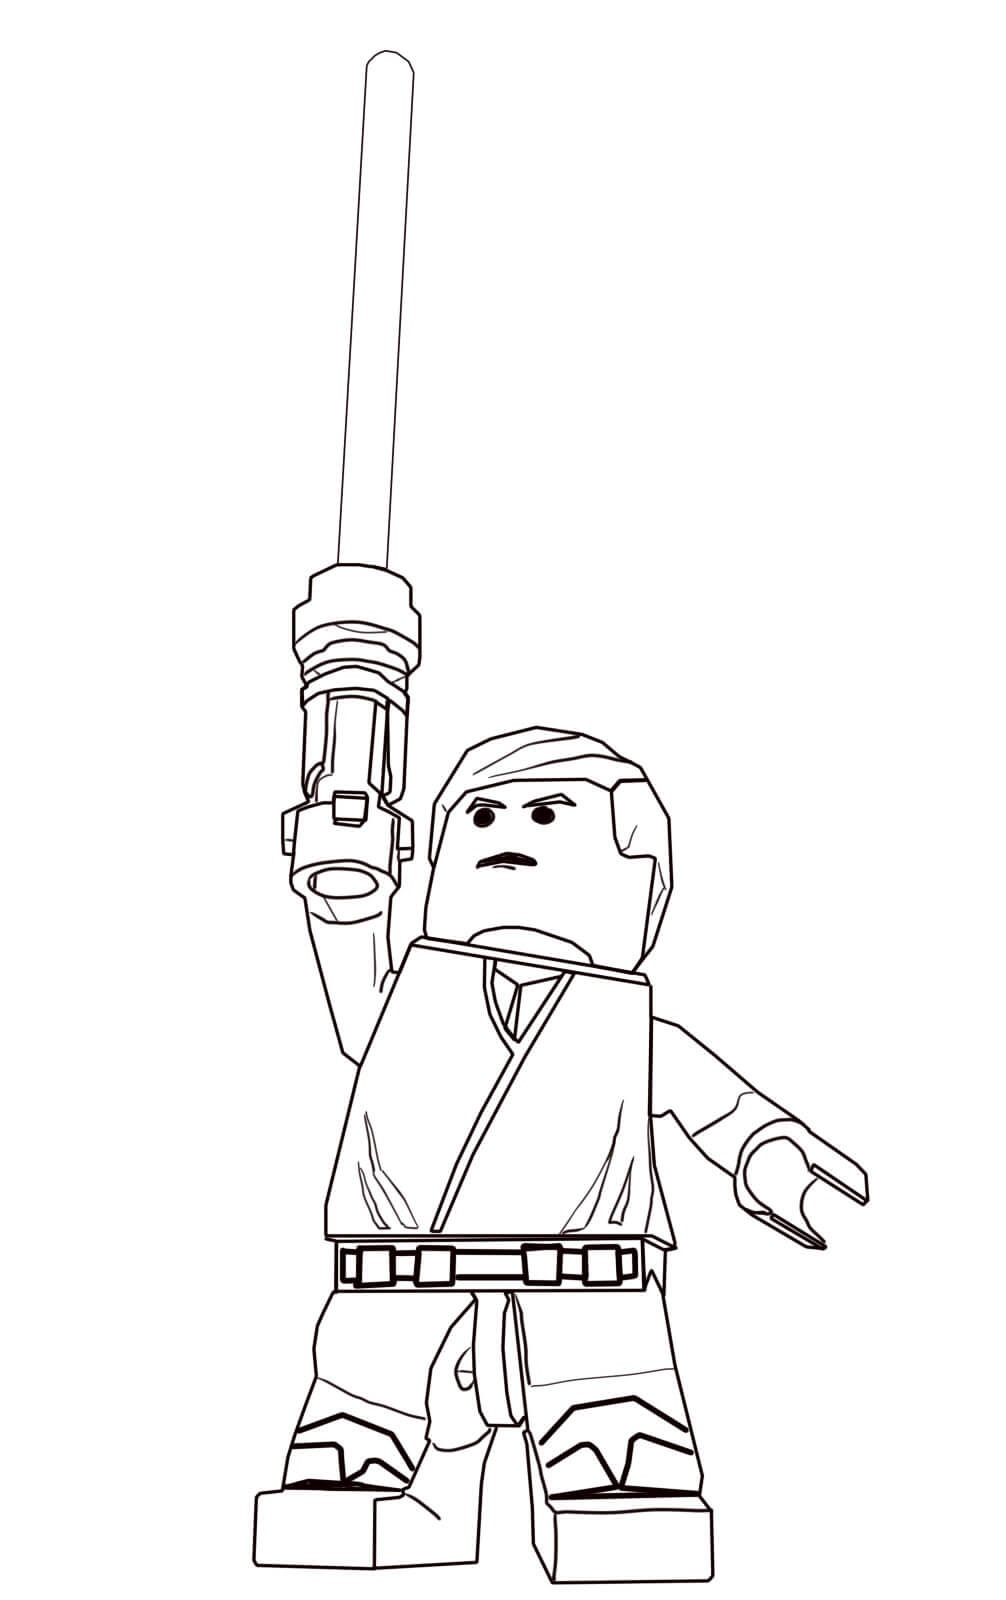 Lego Star Wars Luke Skywalker Coloring Page